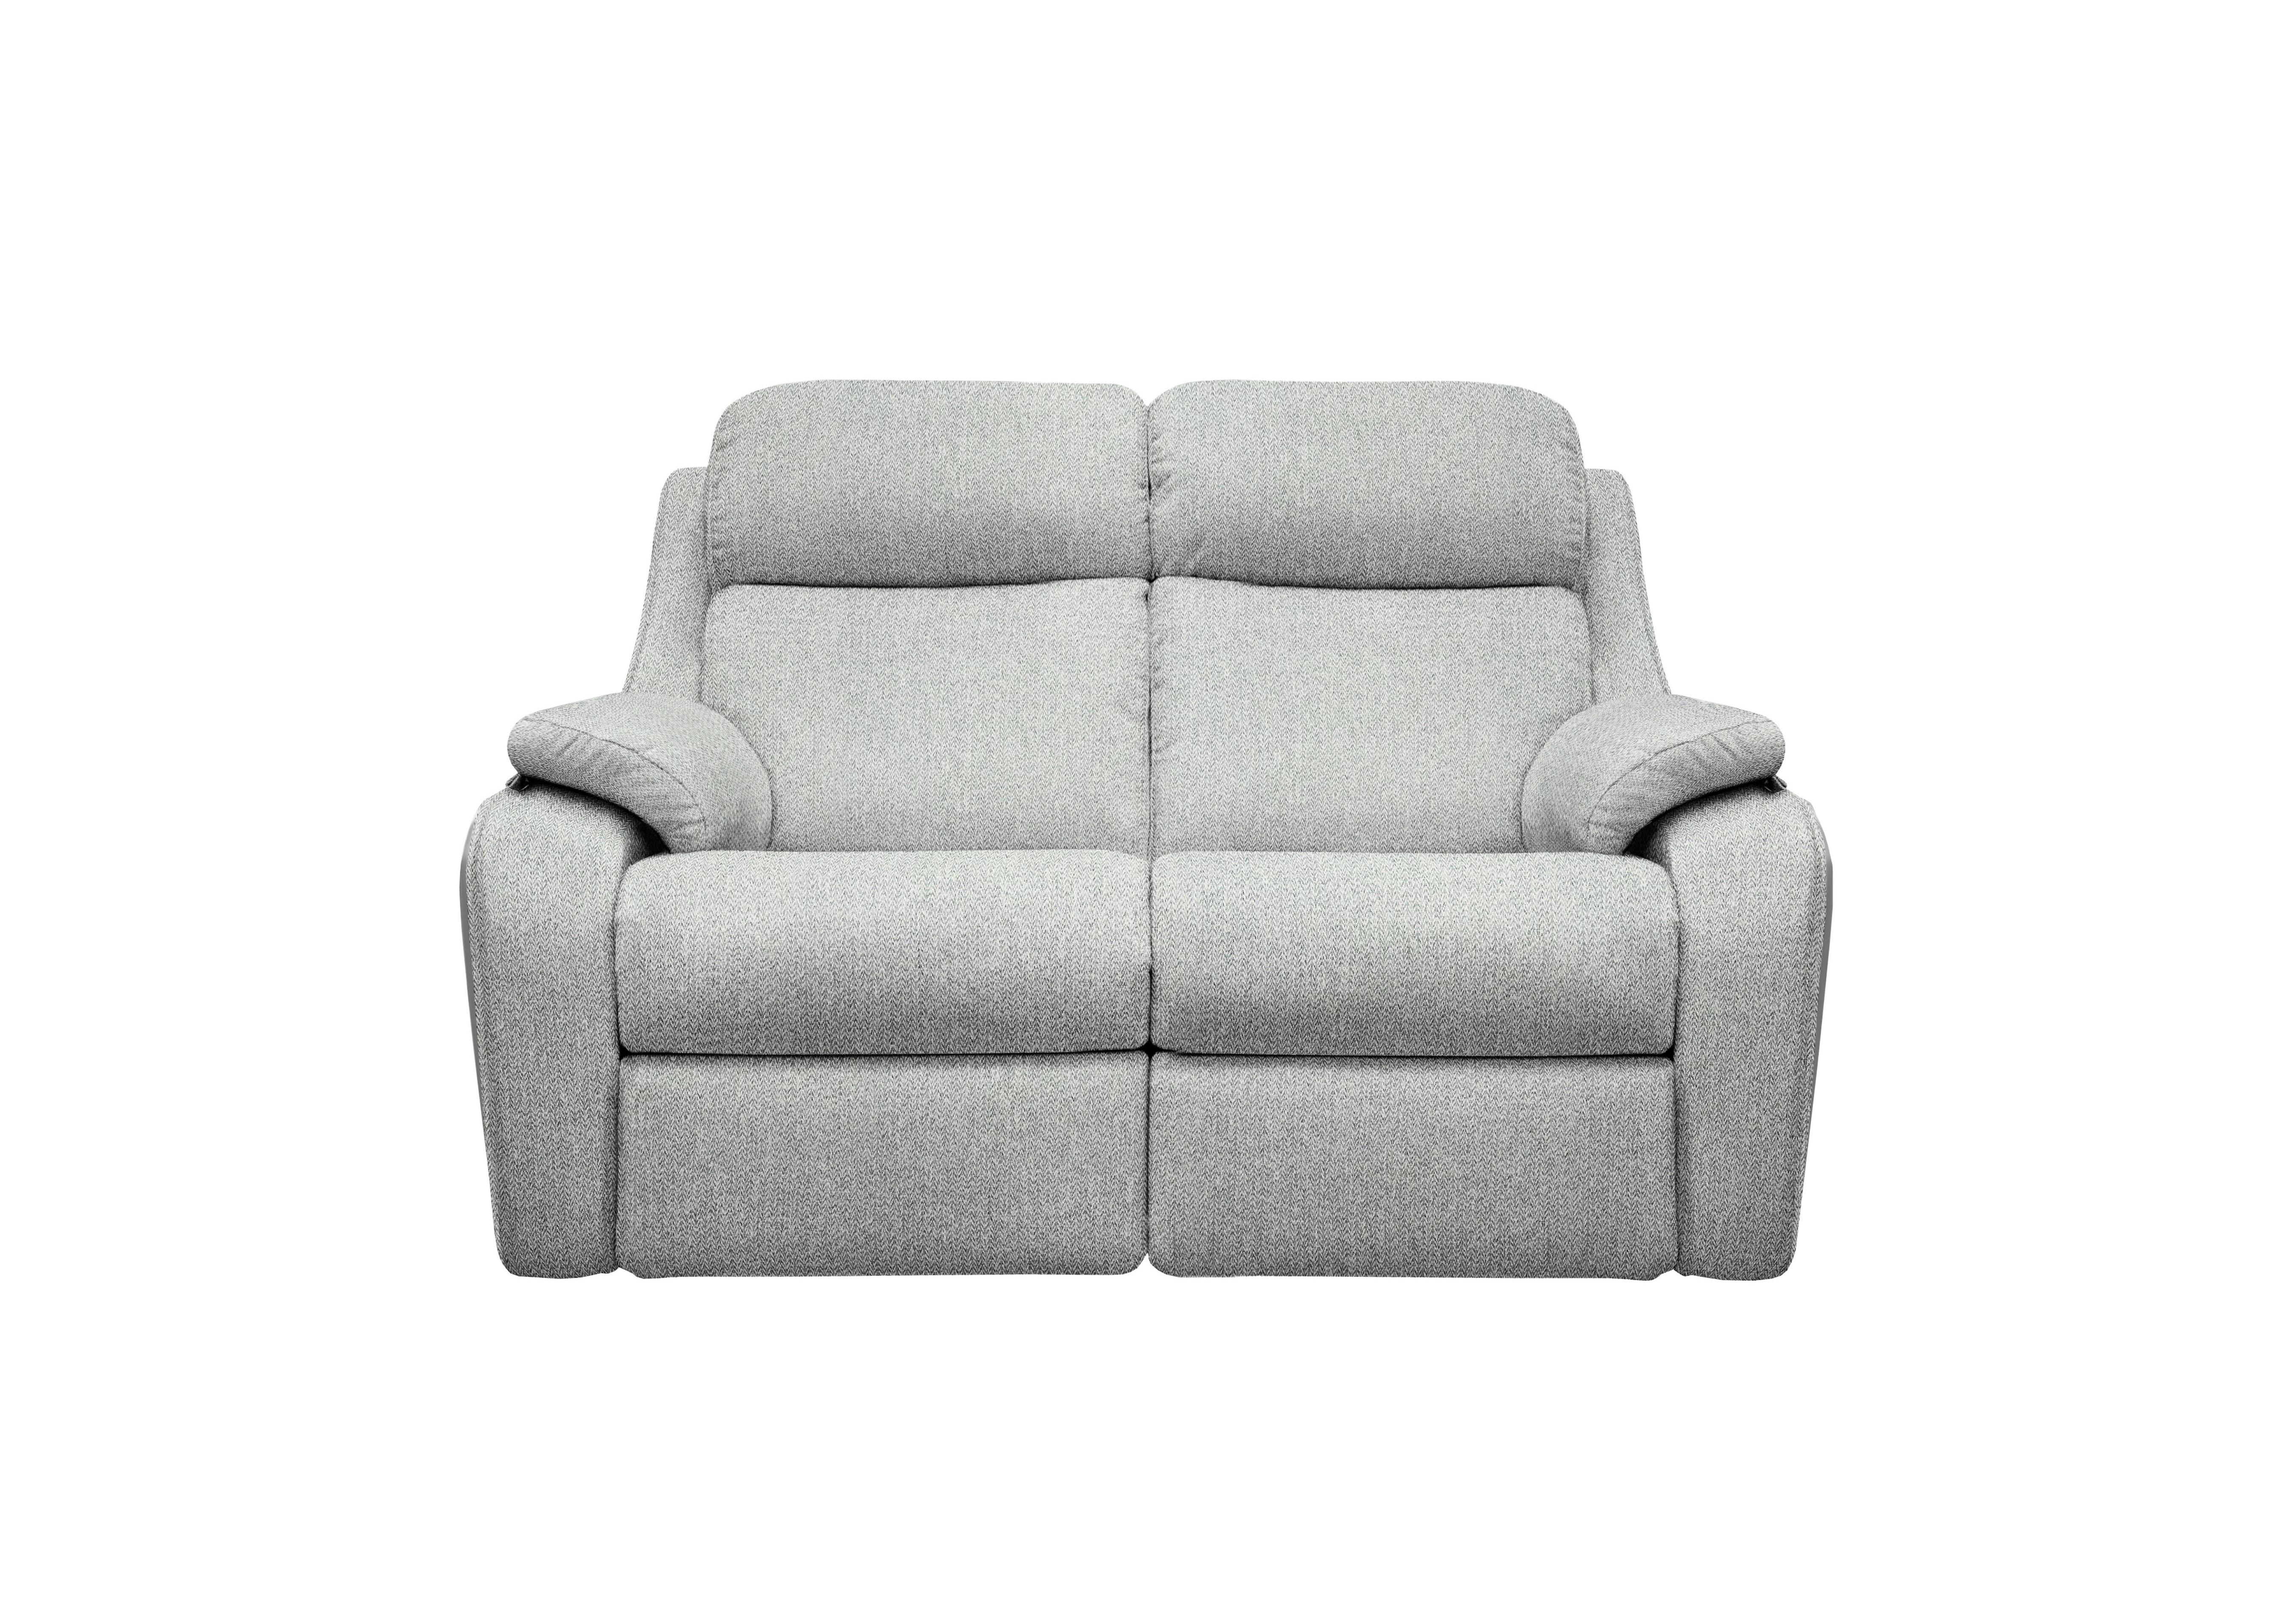 Kingsbury 2 Seater Fabric Sofa in A011 Swift Cygnet on Furniture Village